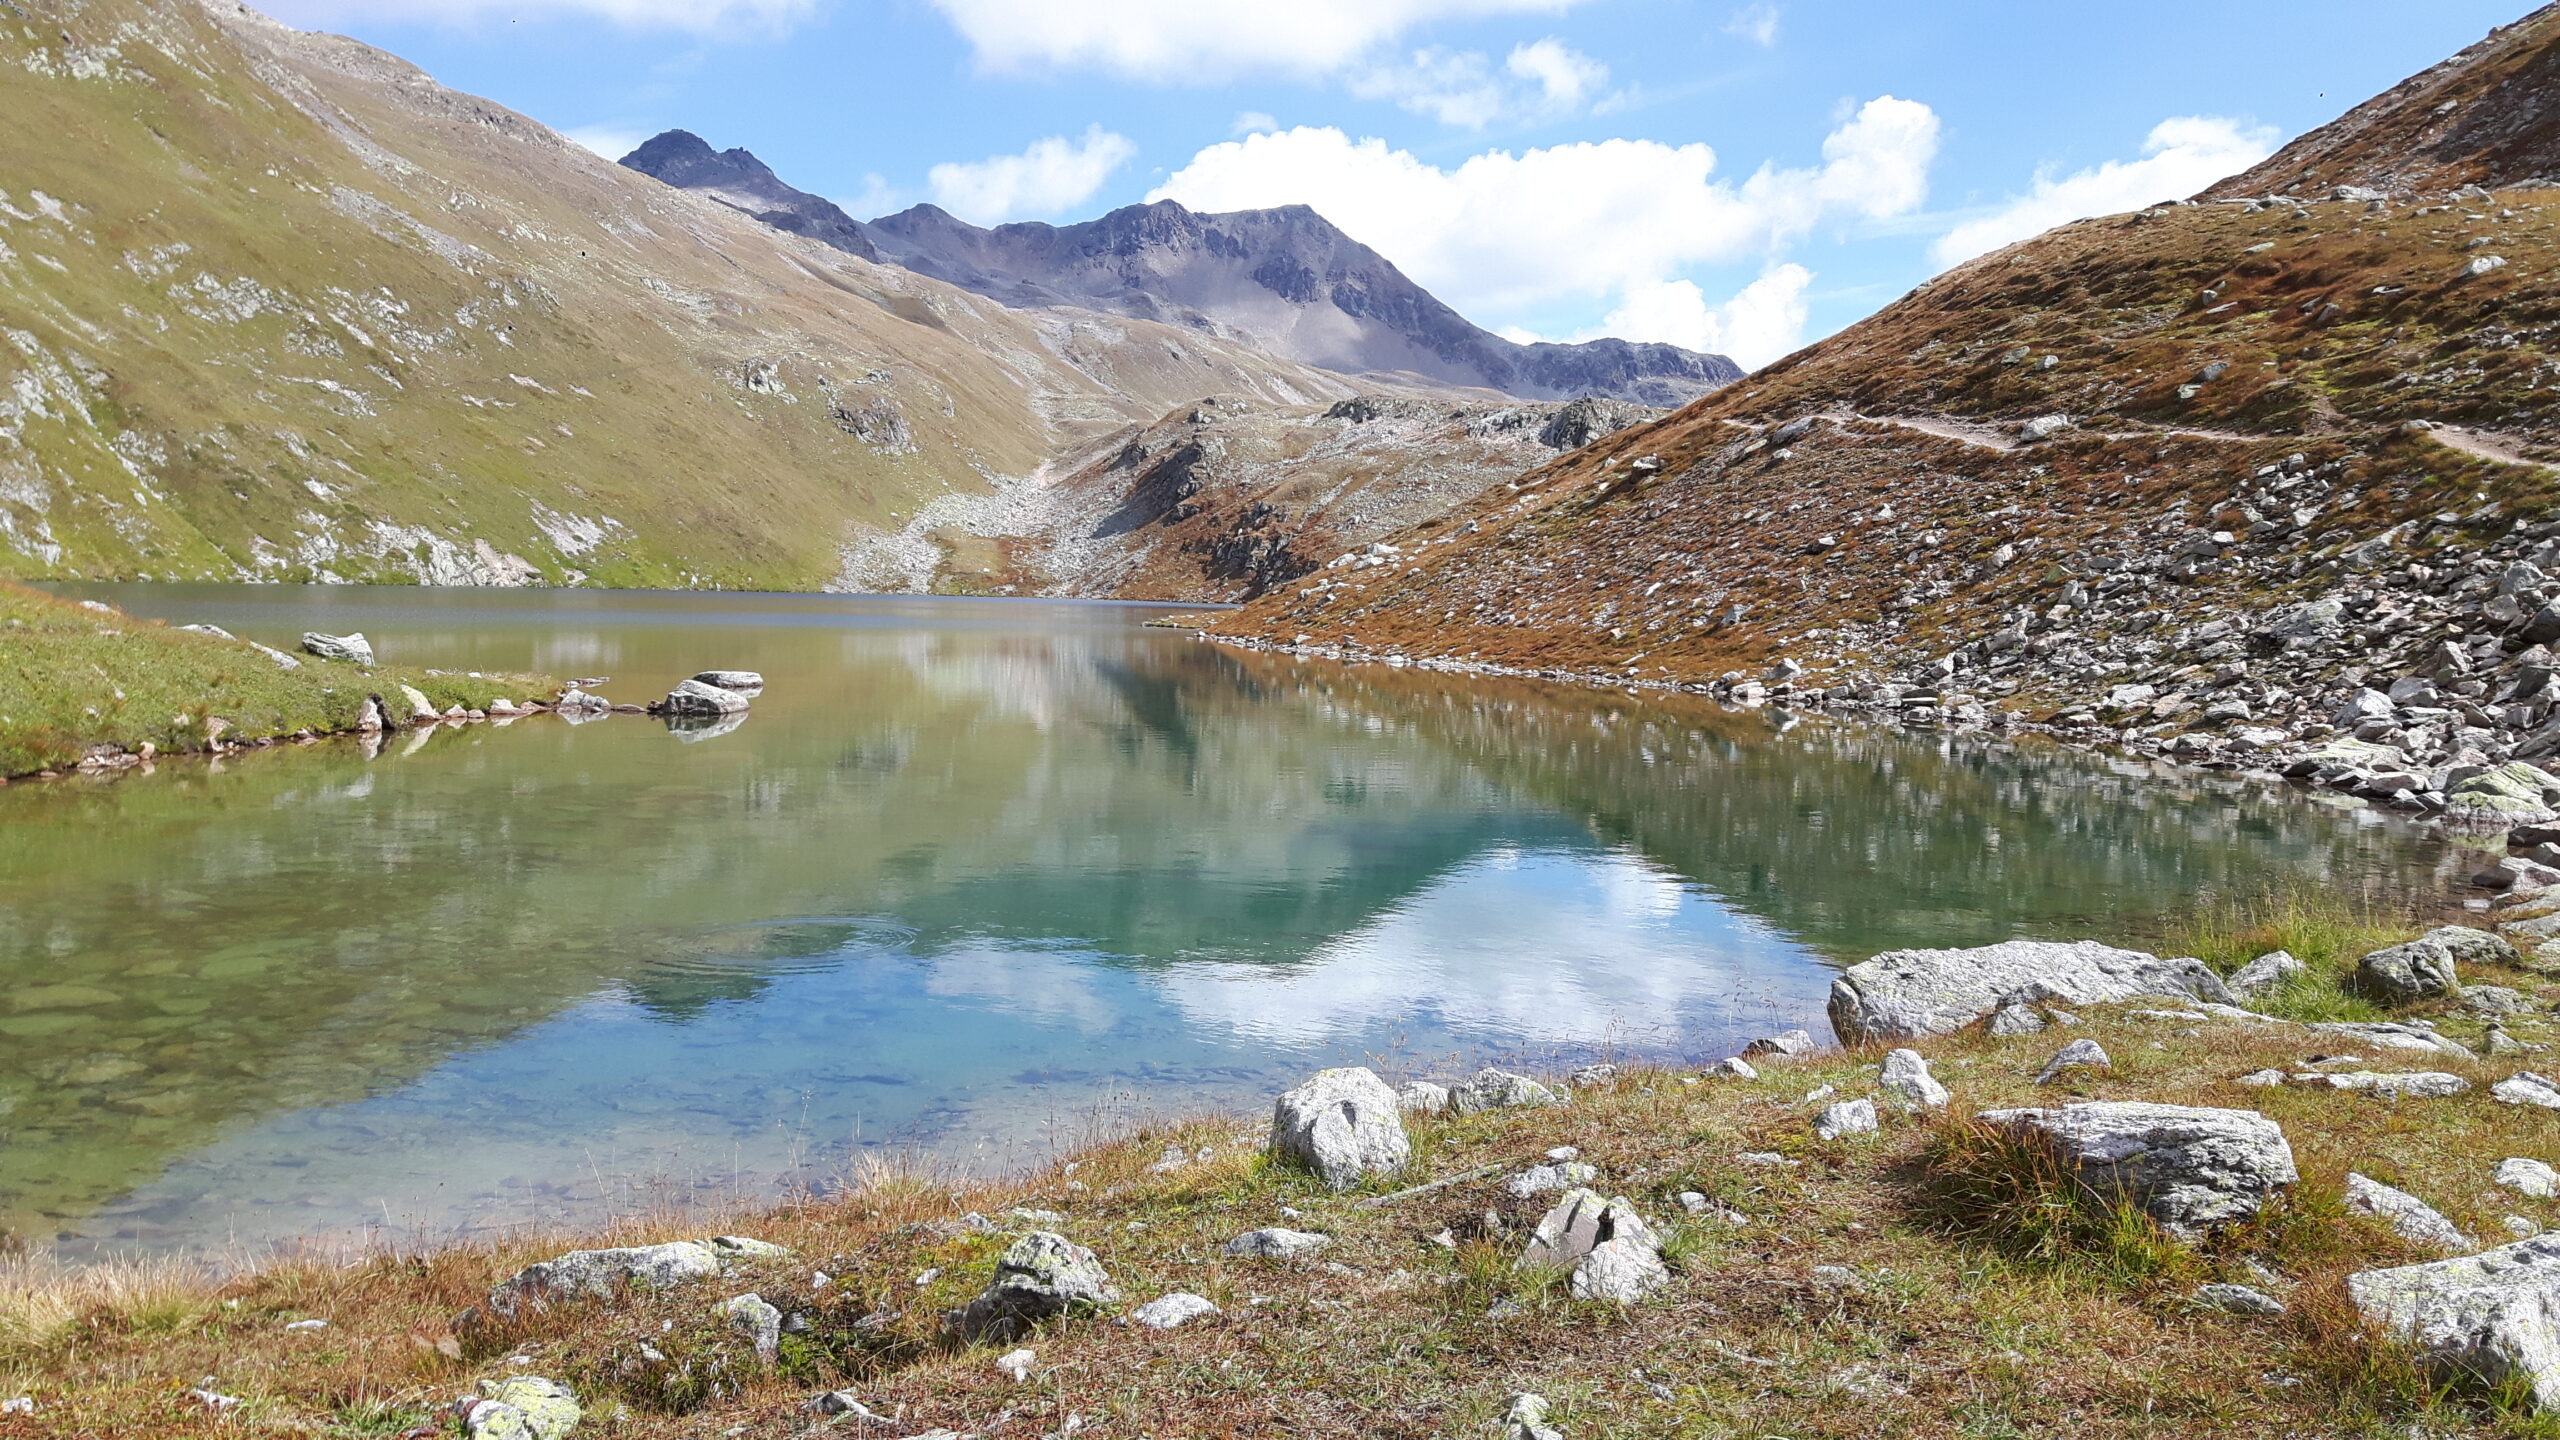 Wanderung zur Keschhütte, Alpsee